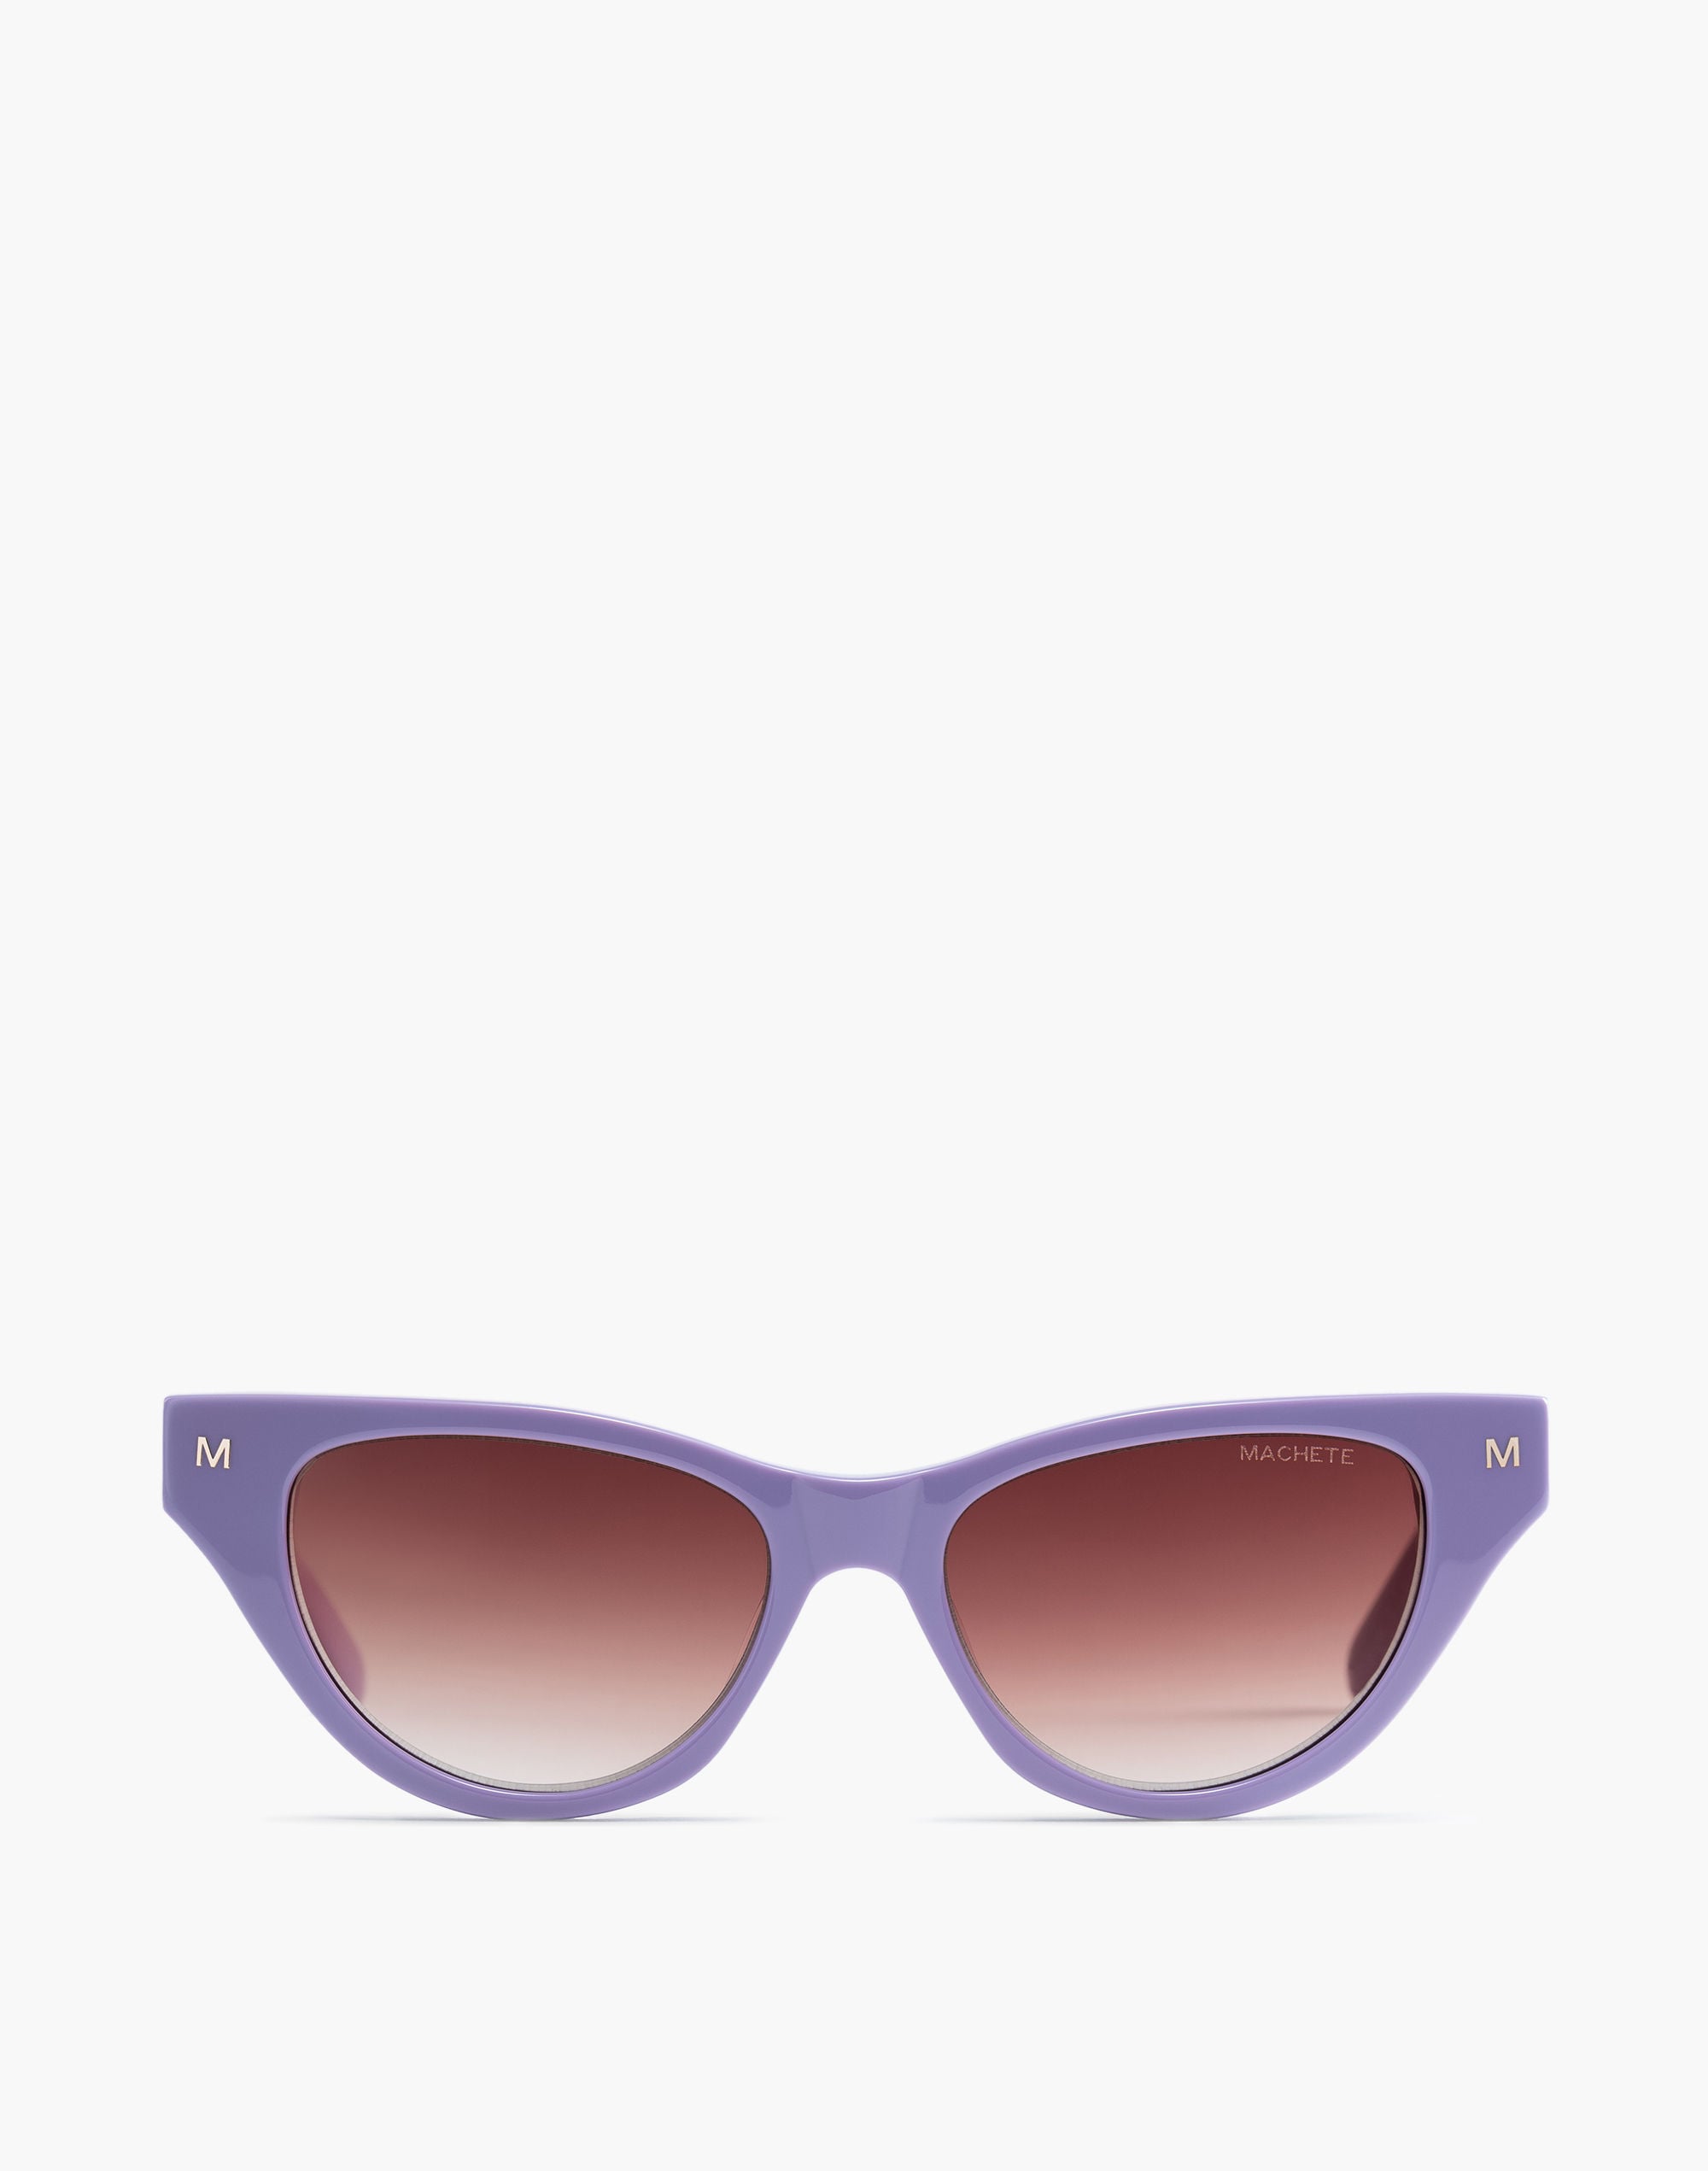 Shop Mw Machete Suzy Sunglasses In Violet